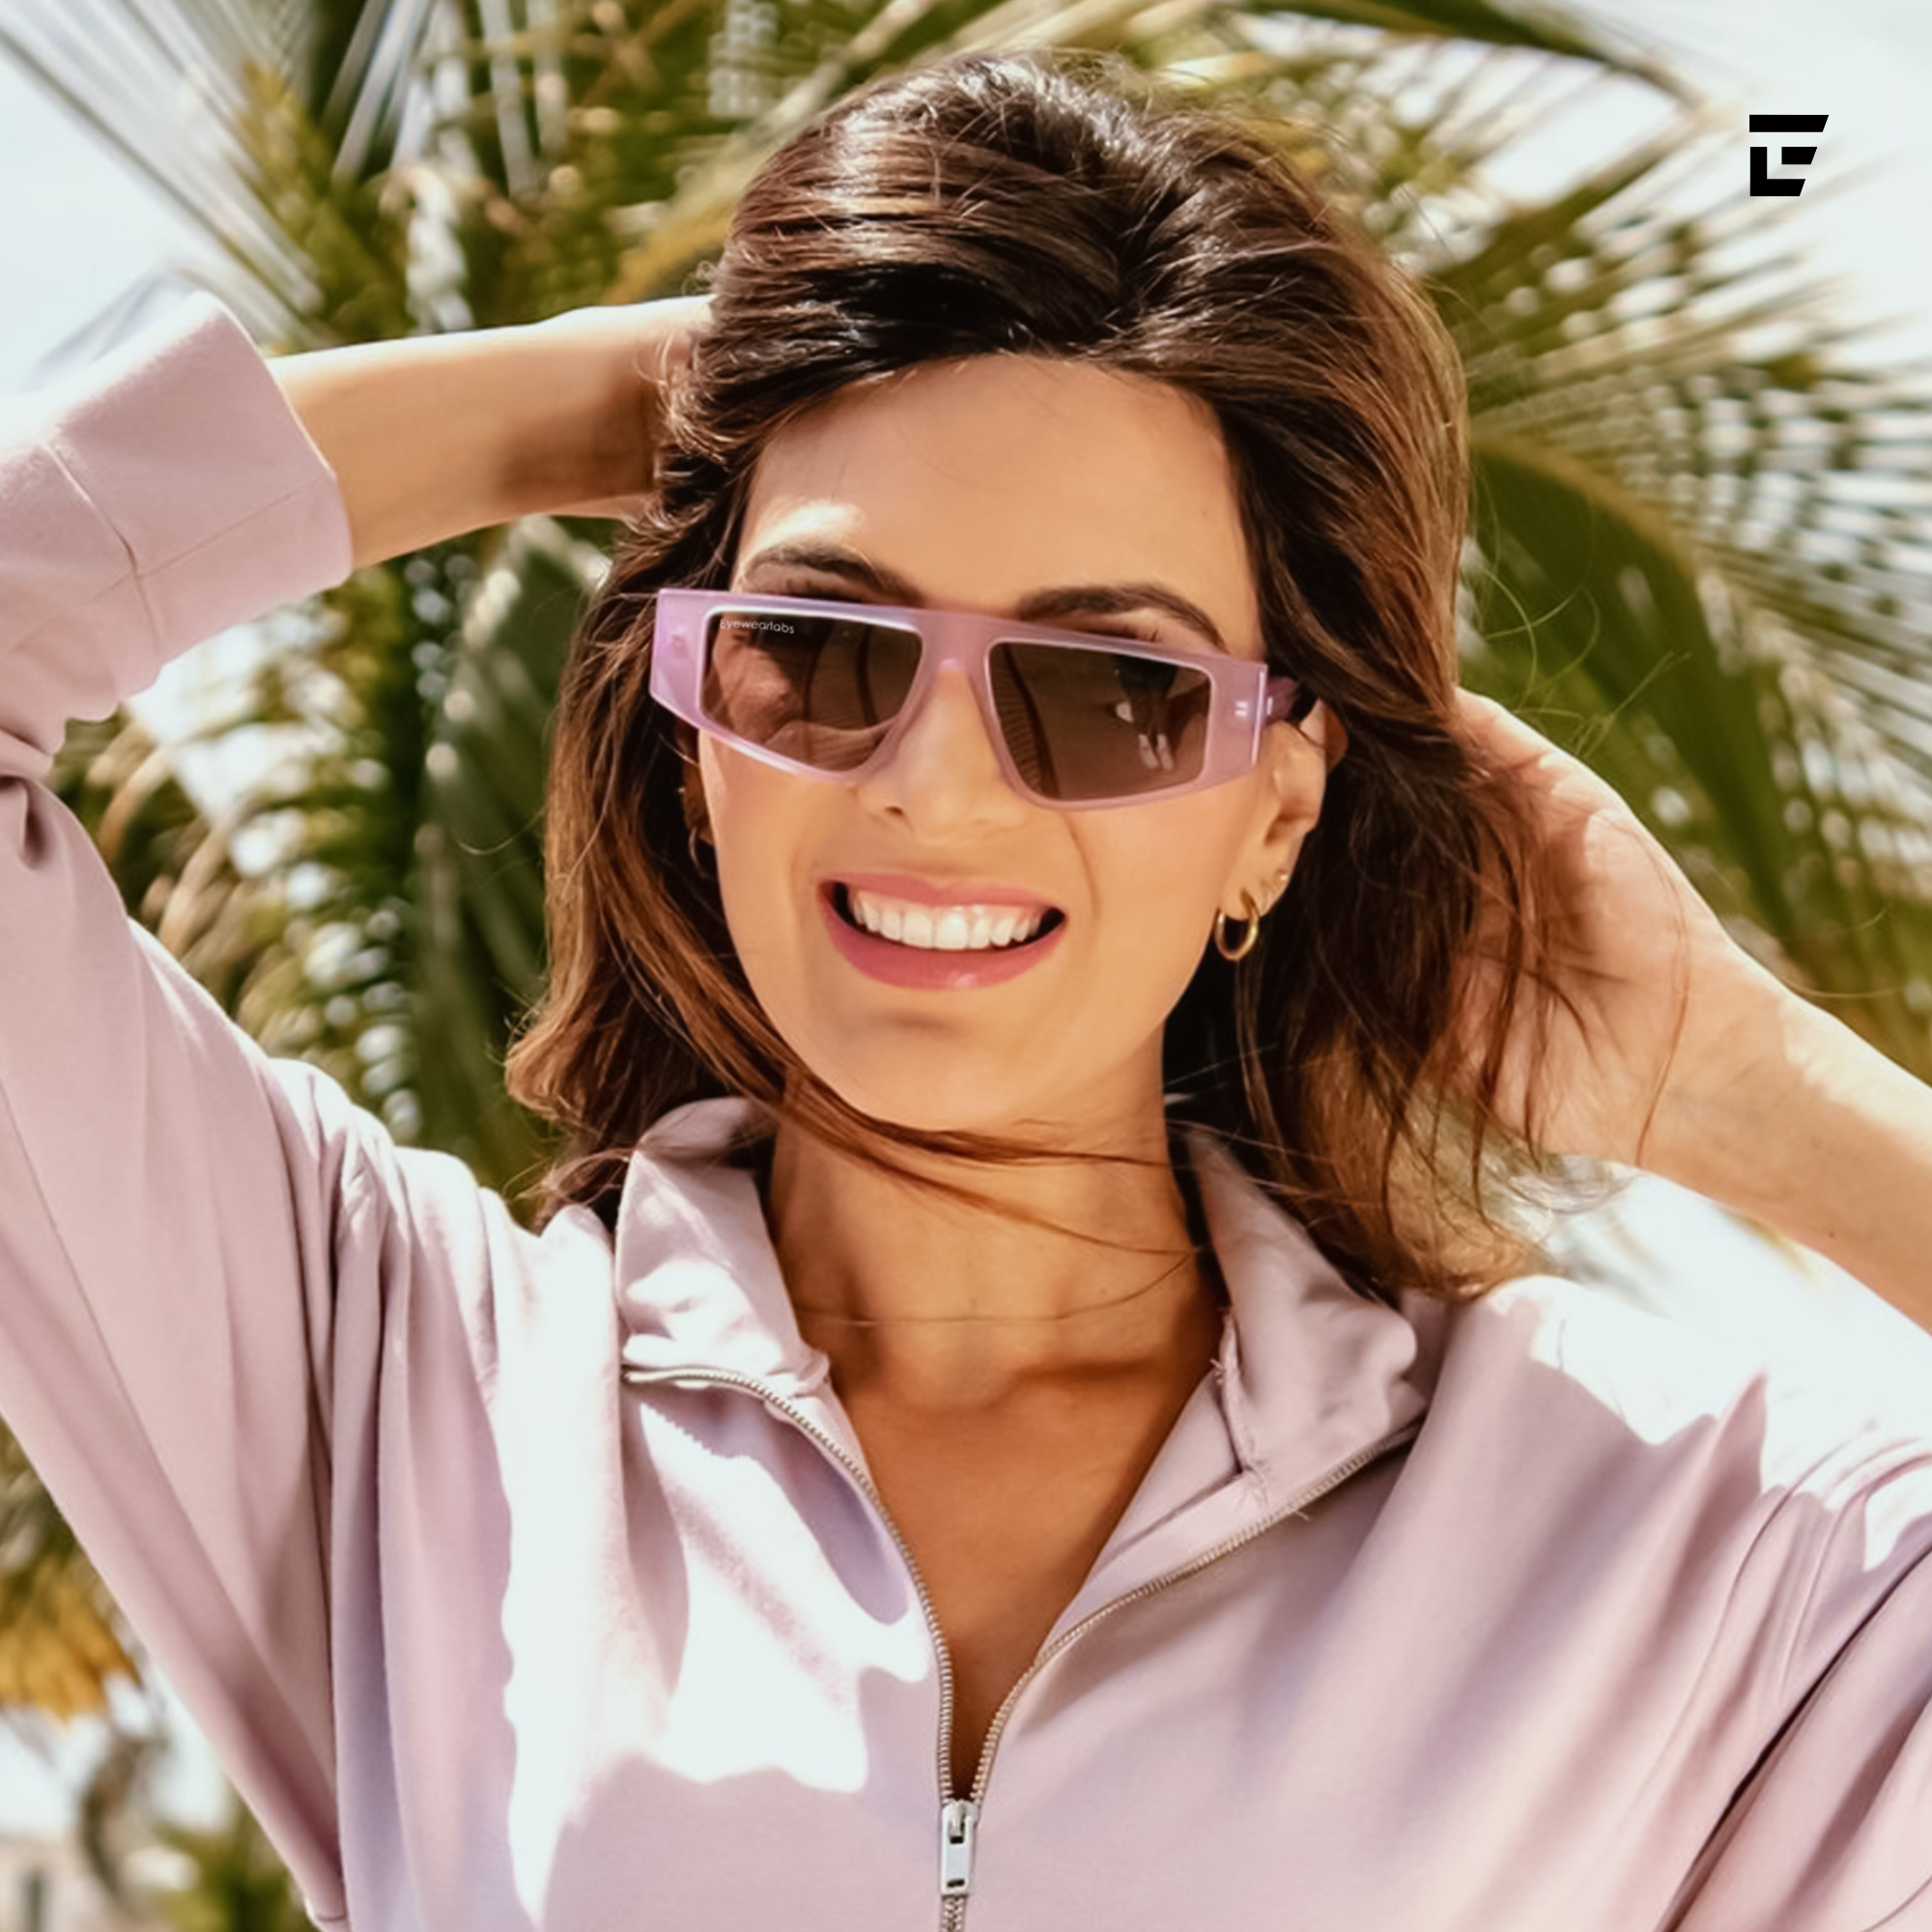 Sunglasses for Women - Buy Stylish Sunglasses Online